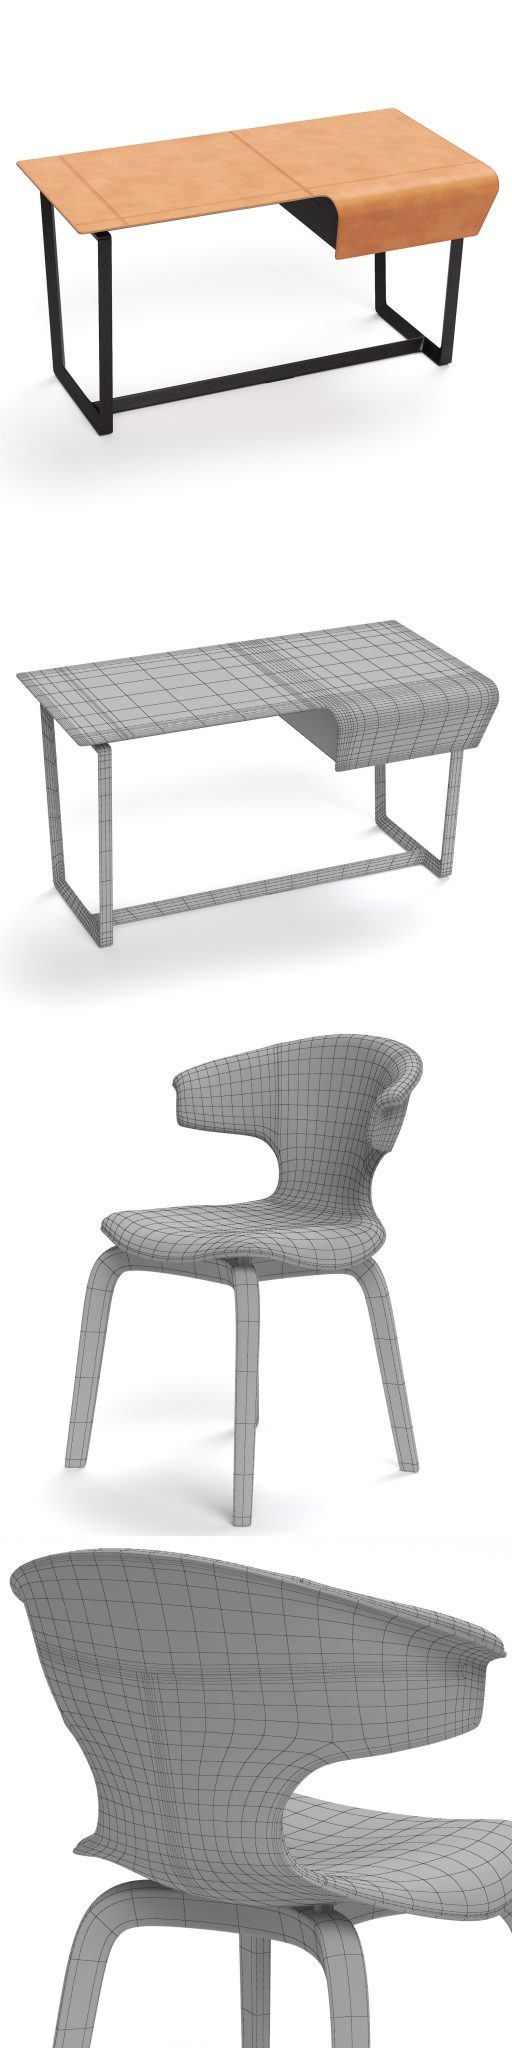 Poltrona Frau Montera & Fred Table & Chair 3D Model 3